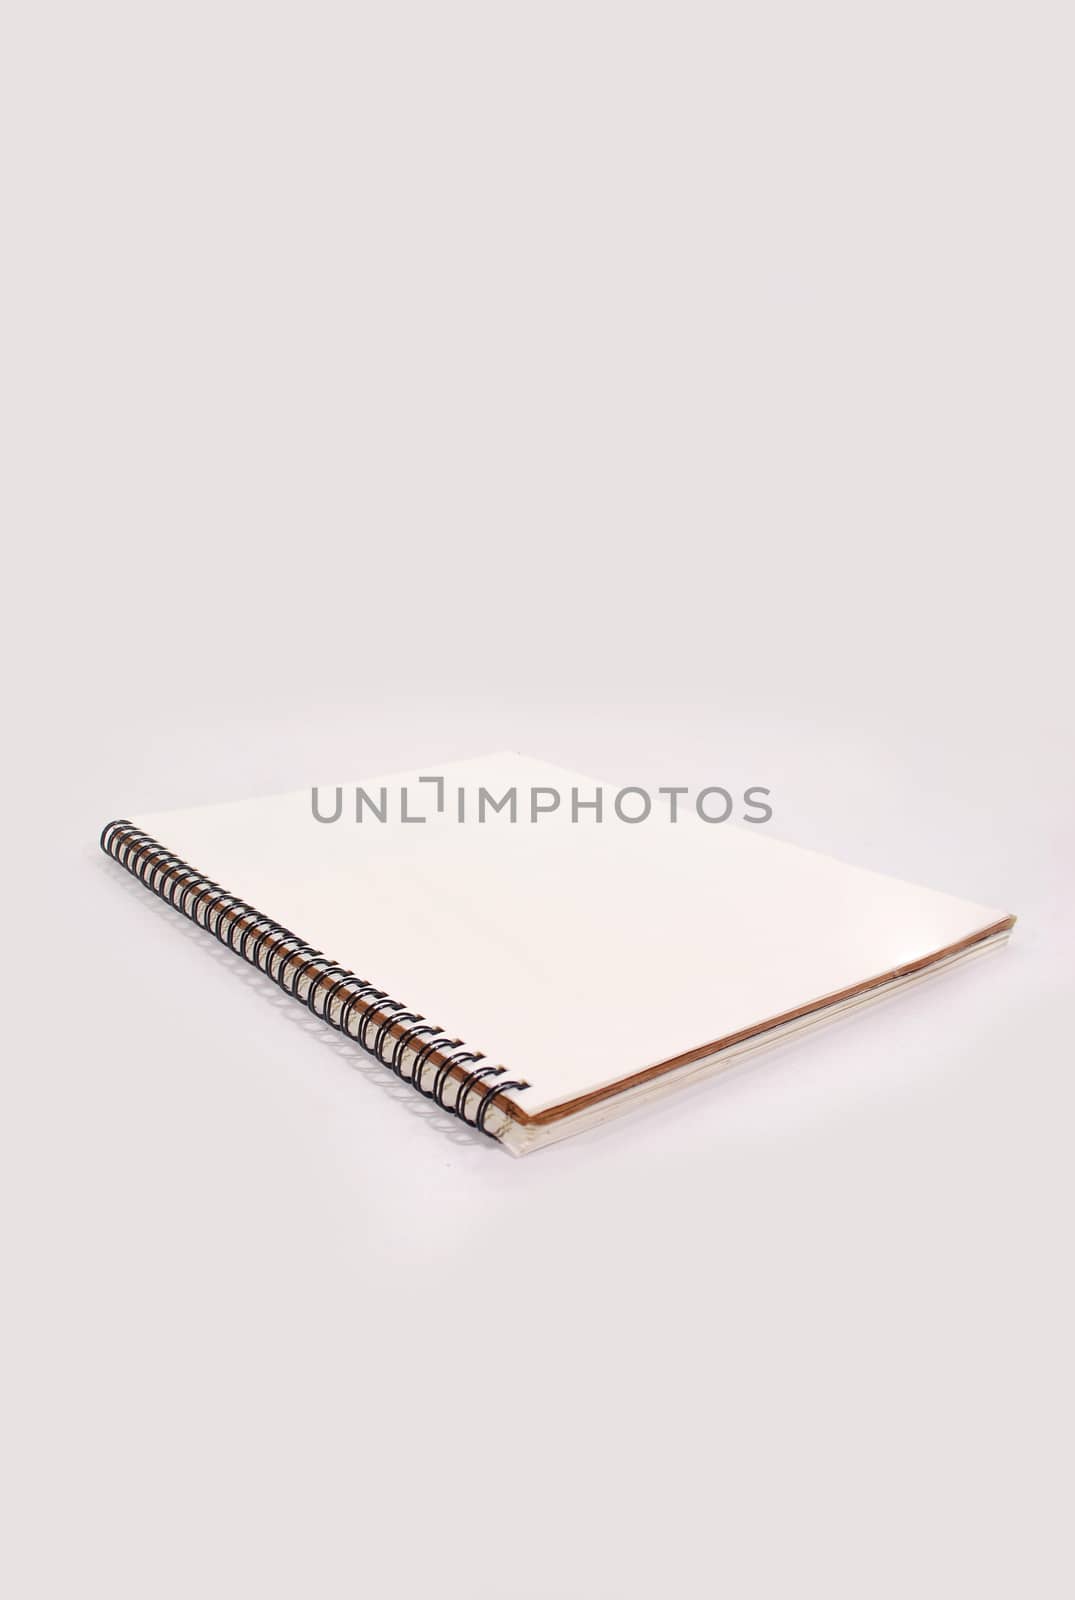 White notebook. by thitimontoyai